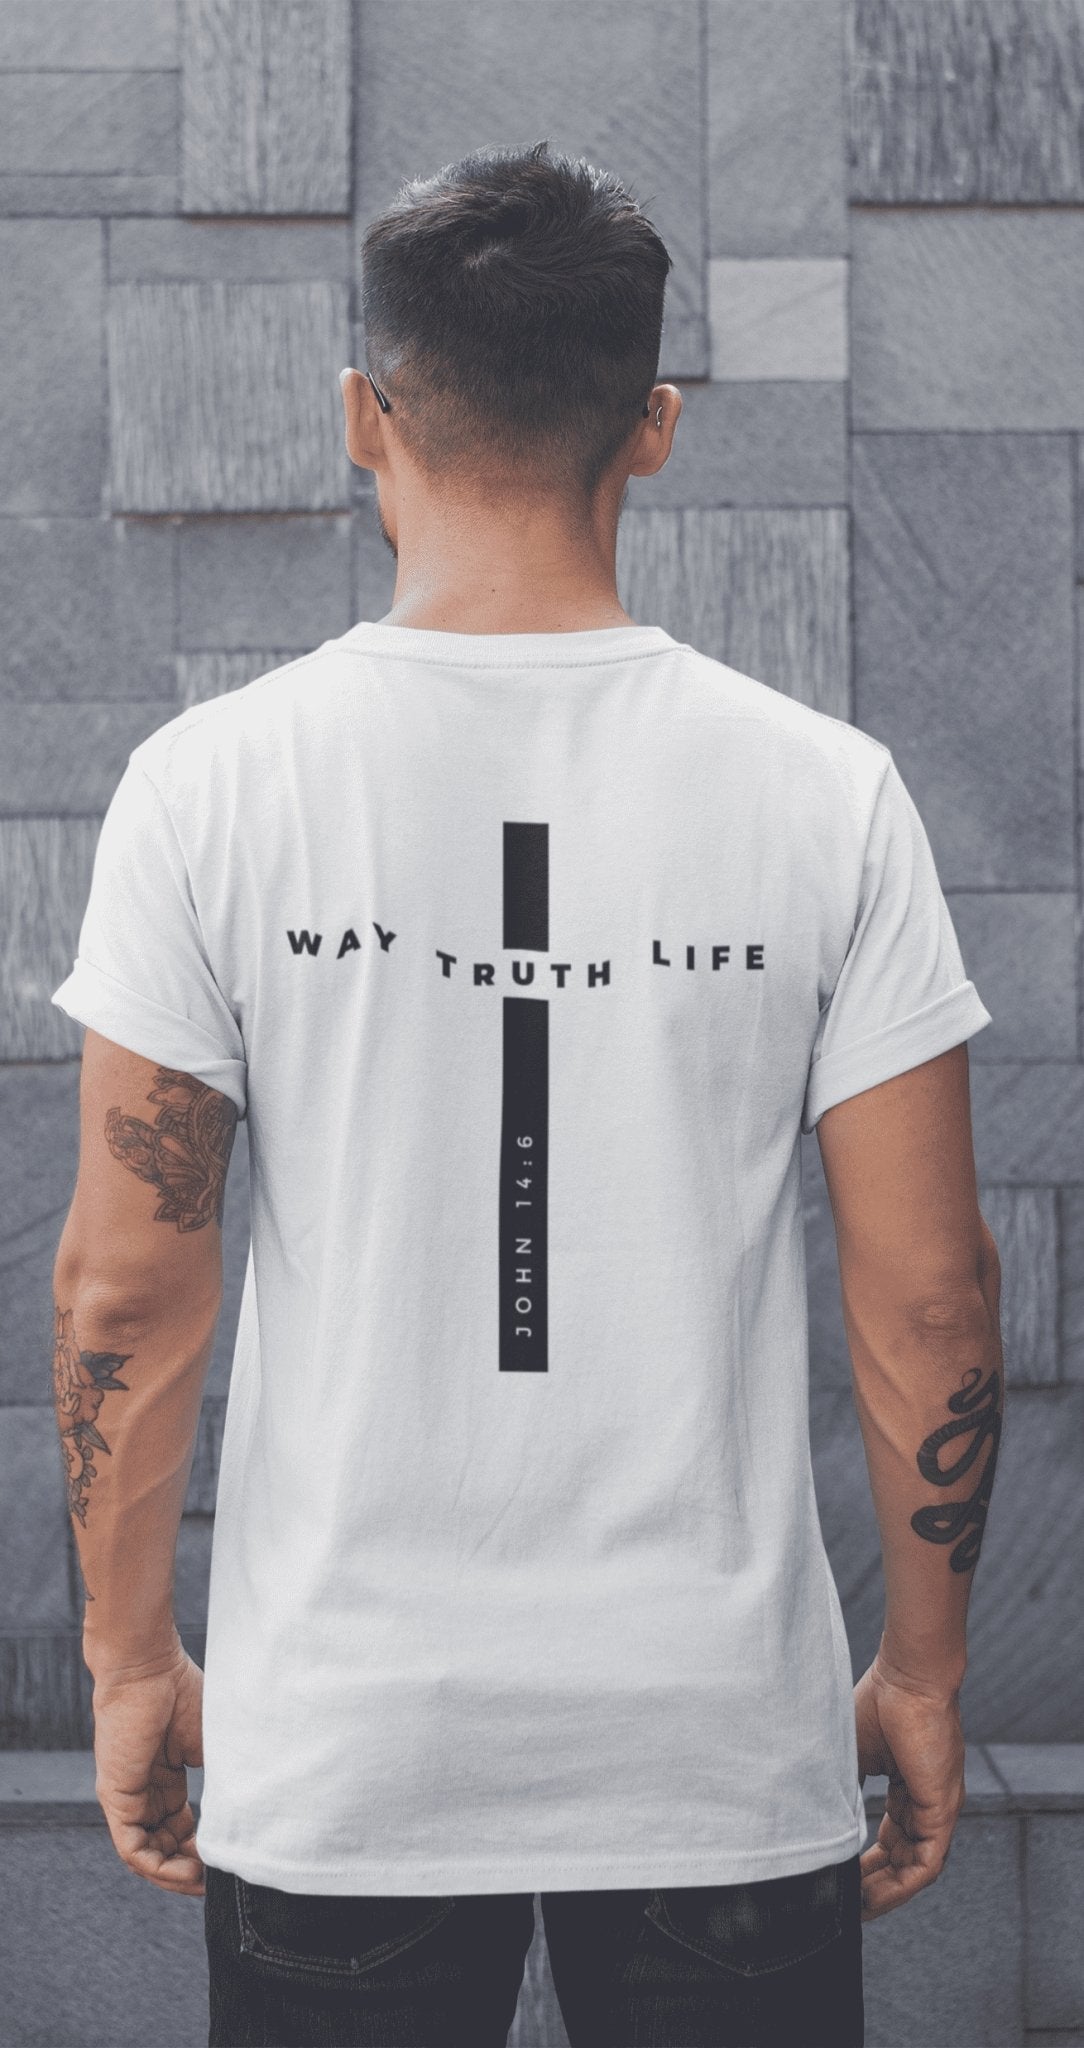 Way Truth Life Backprint Oversize Shirt - Make-Hope